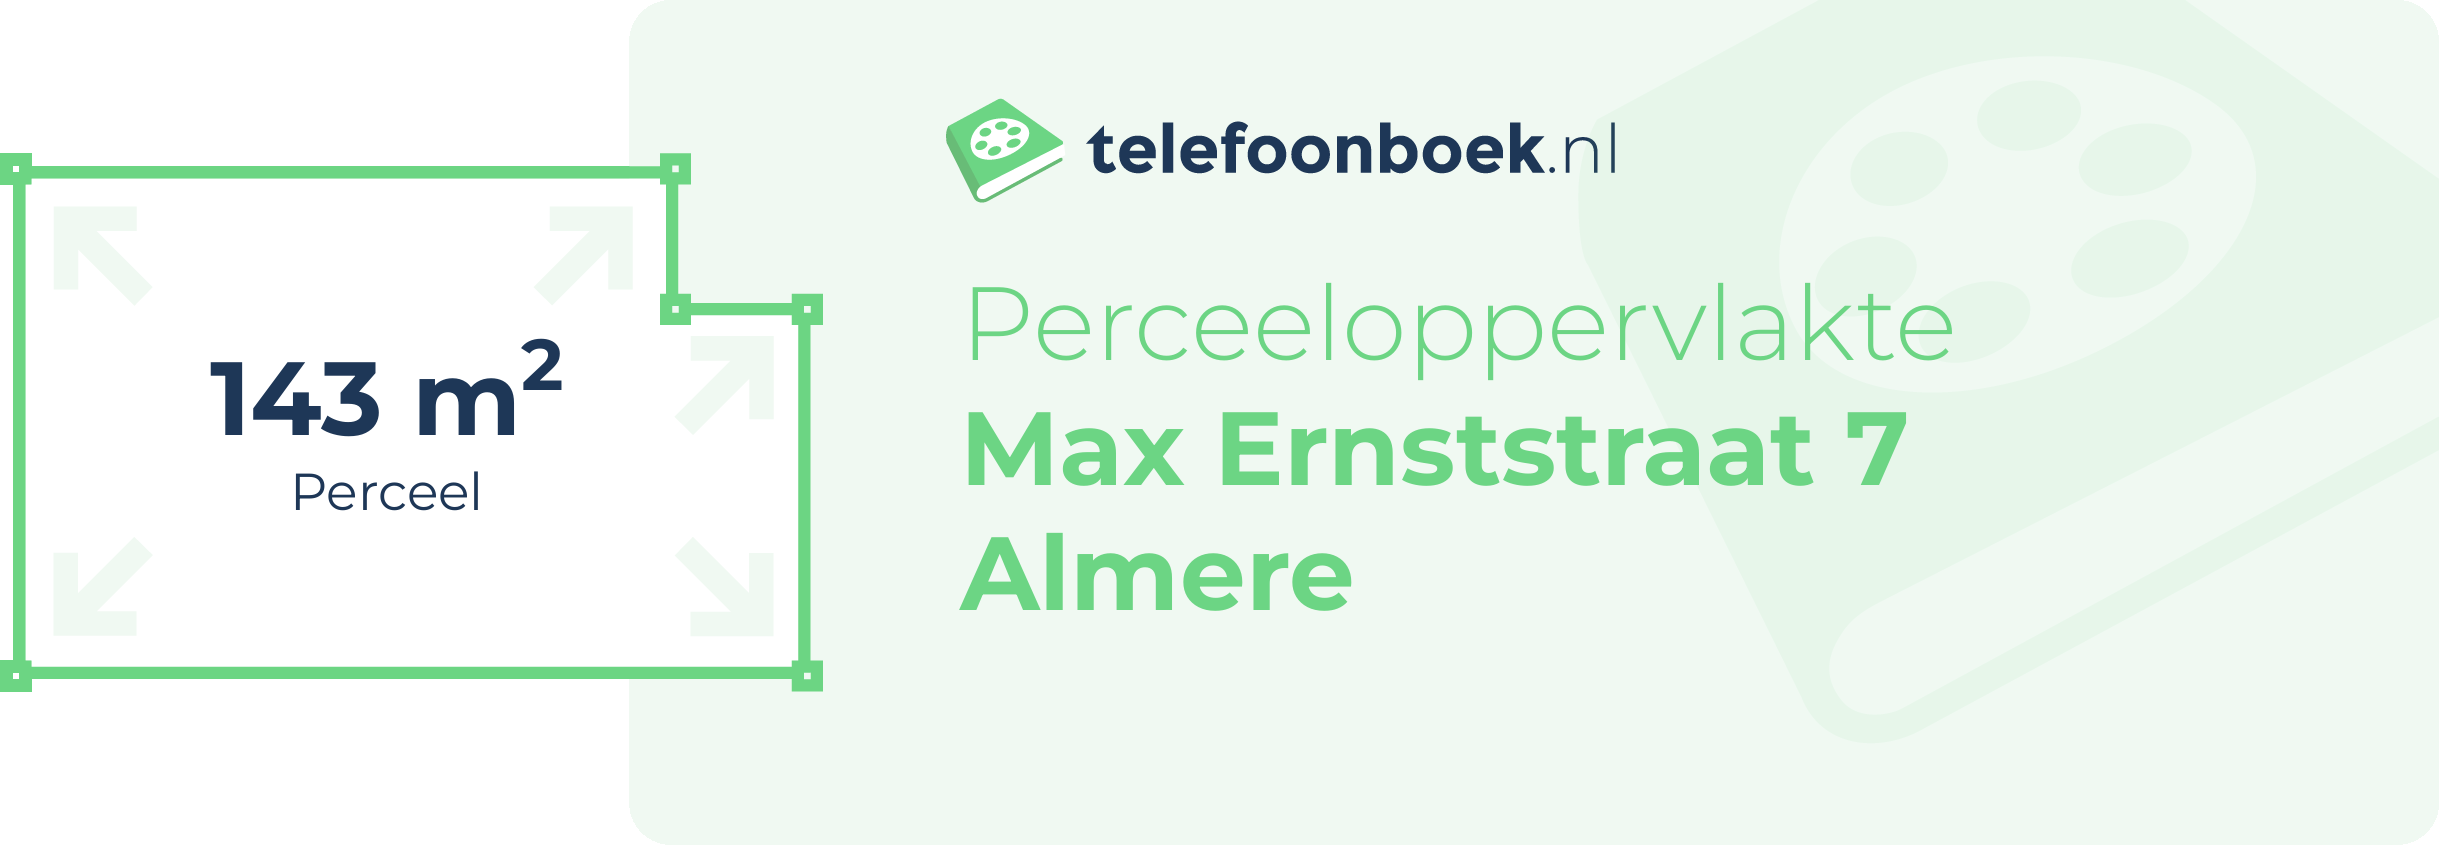 Perceeloppervlakte Max Ernststraat 7 Almere